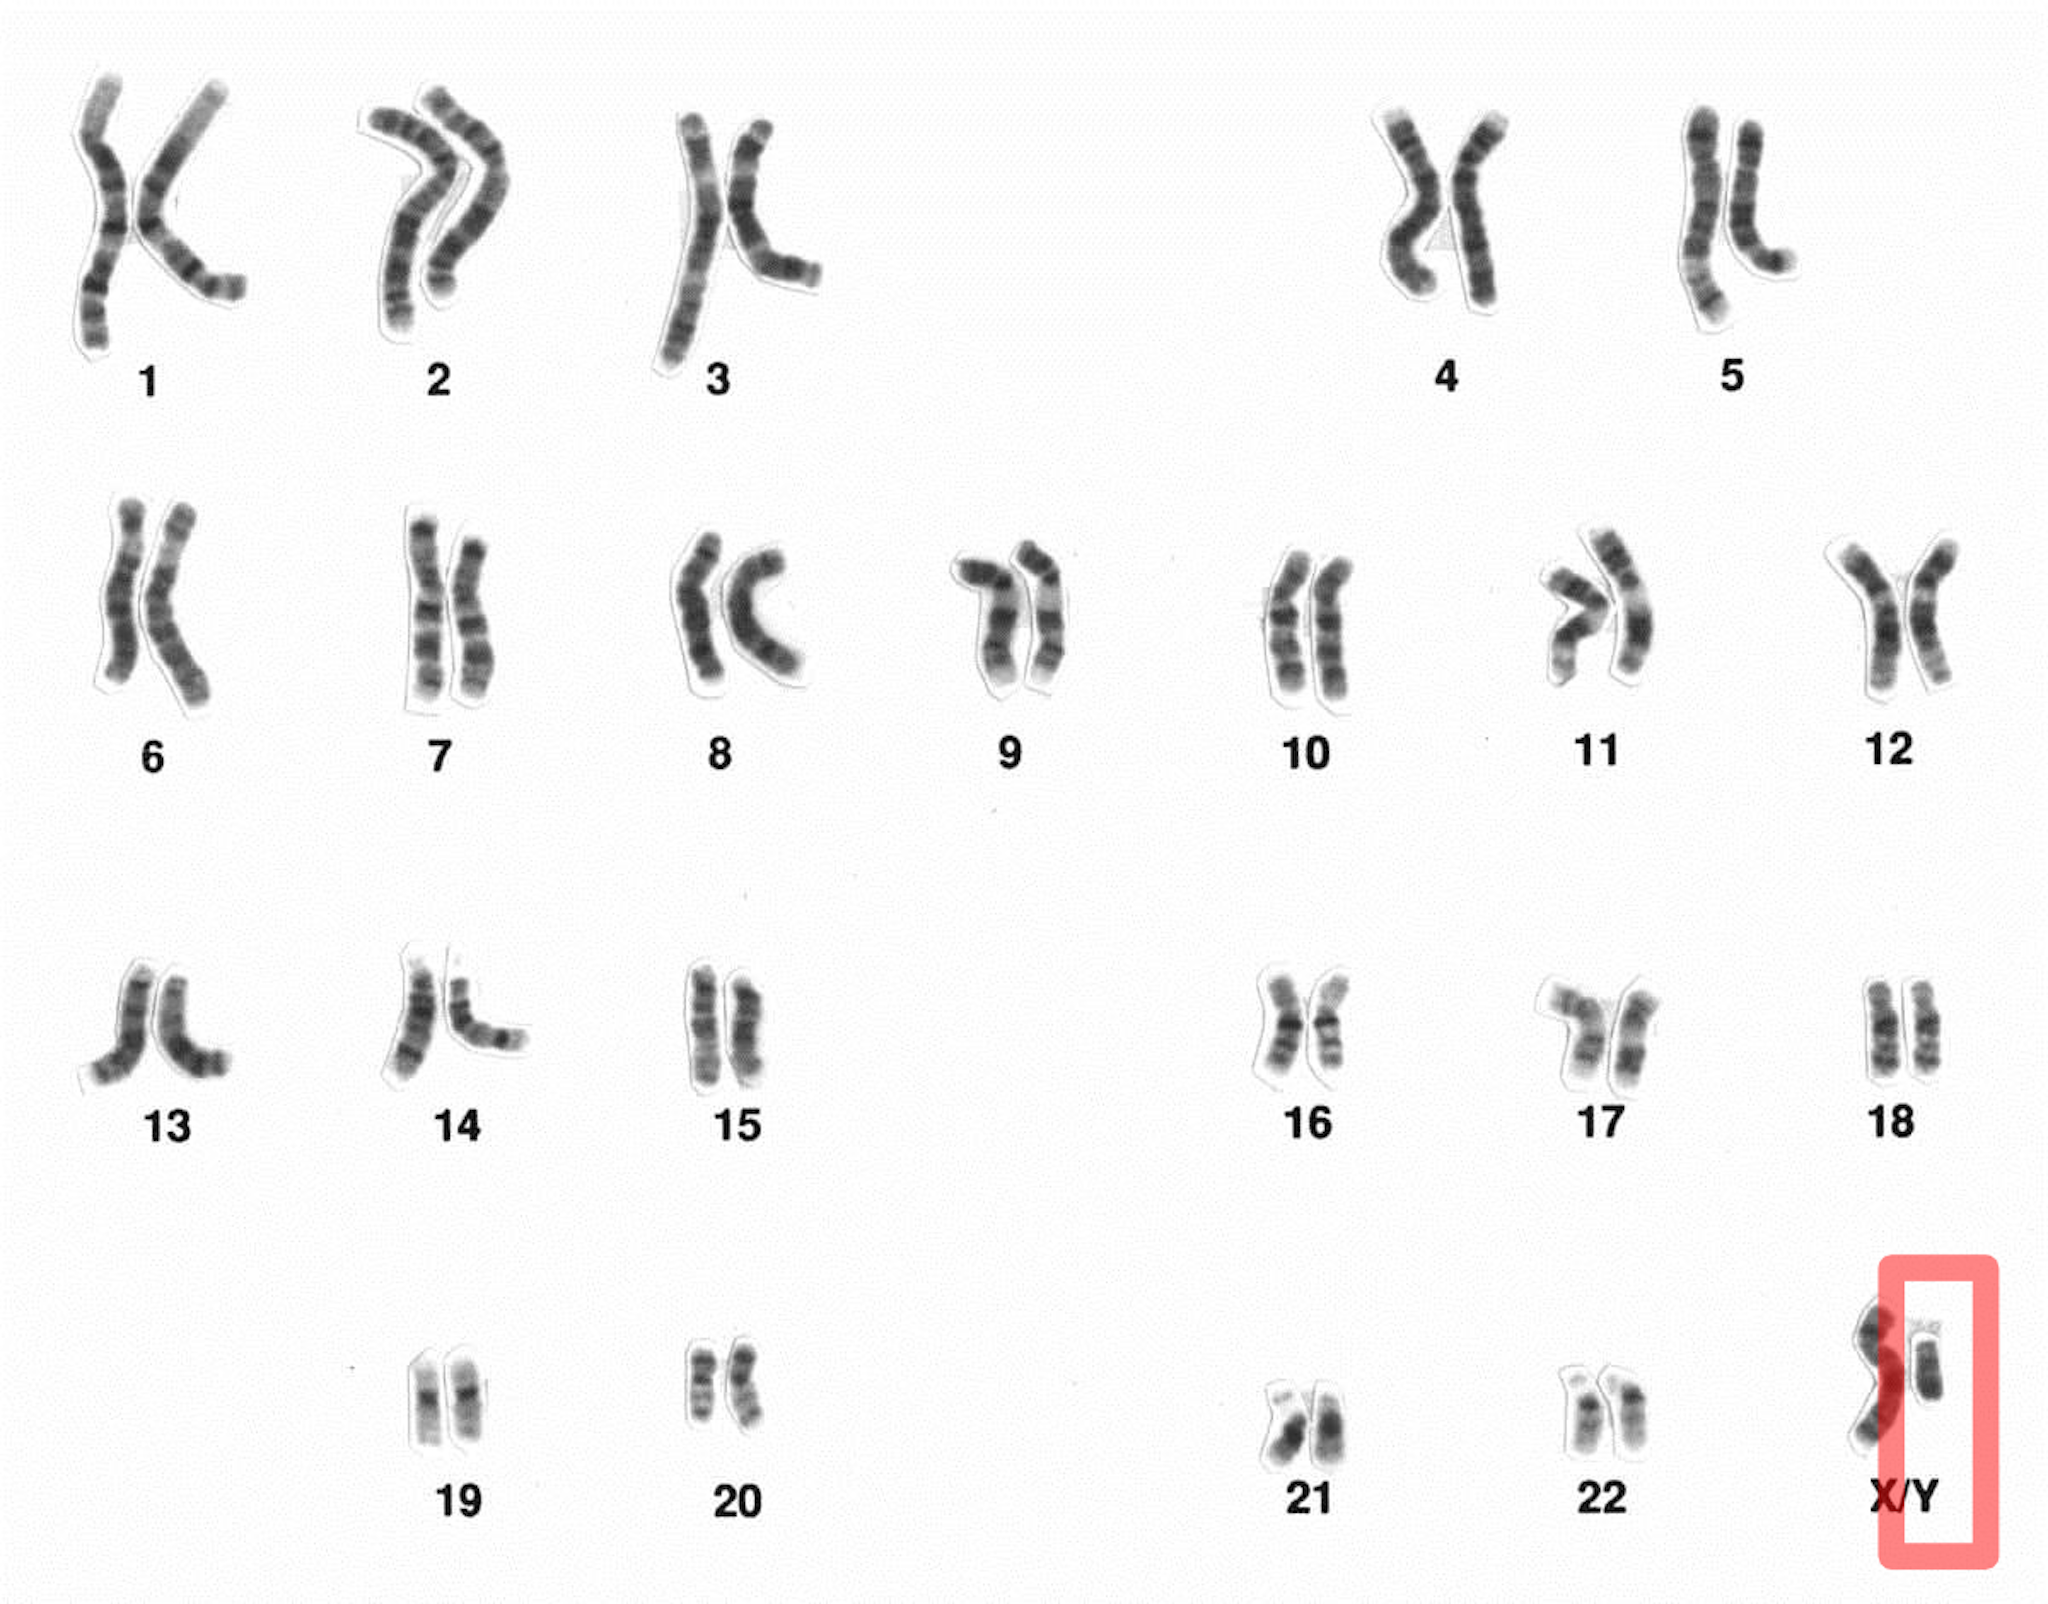 y-chromosome-4.png